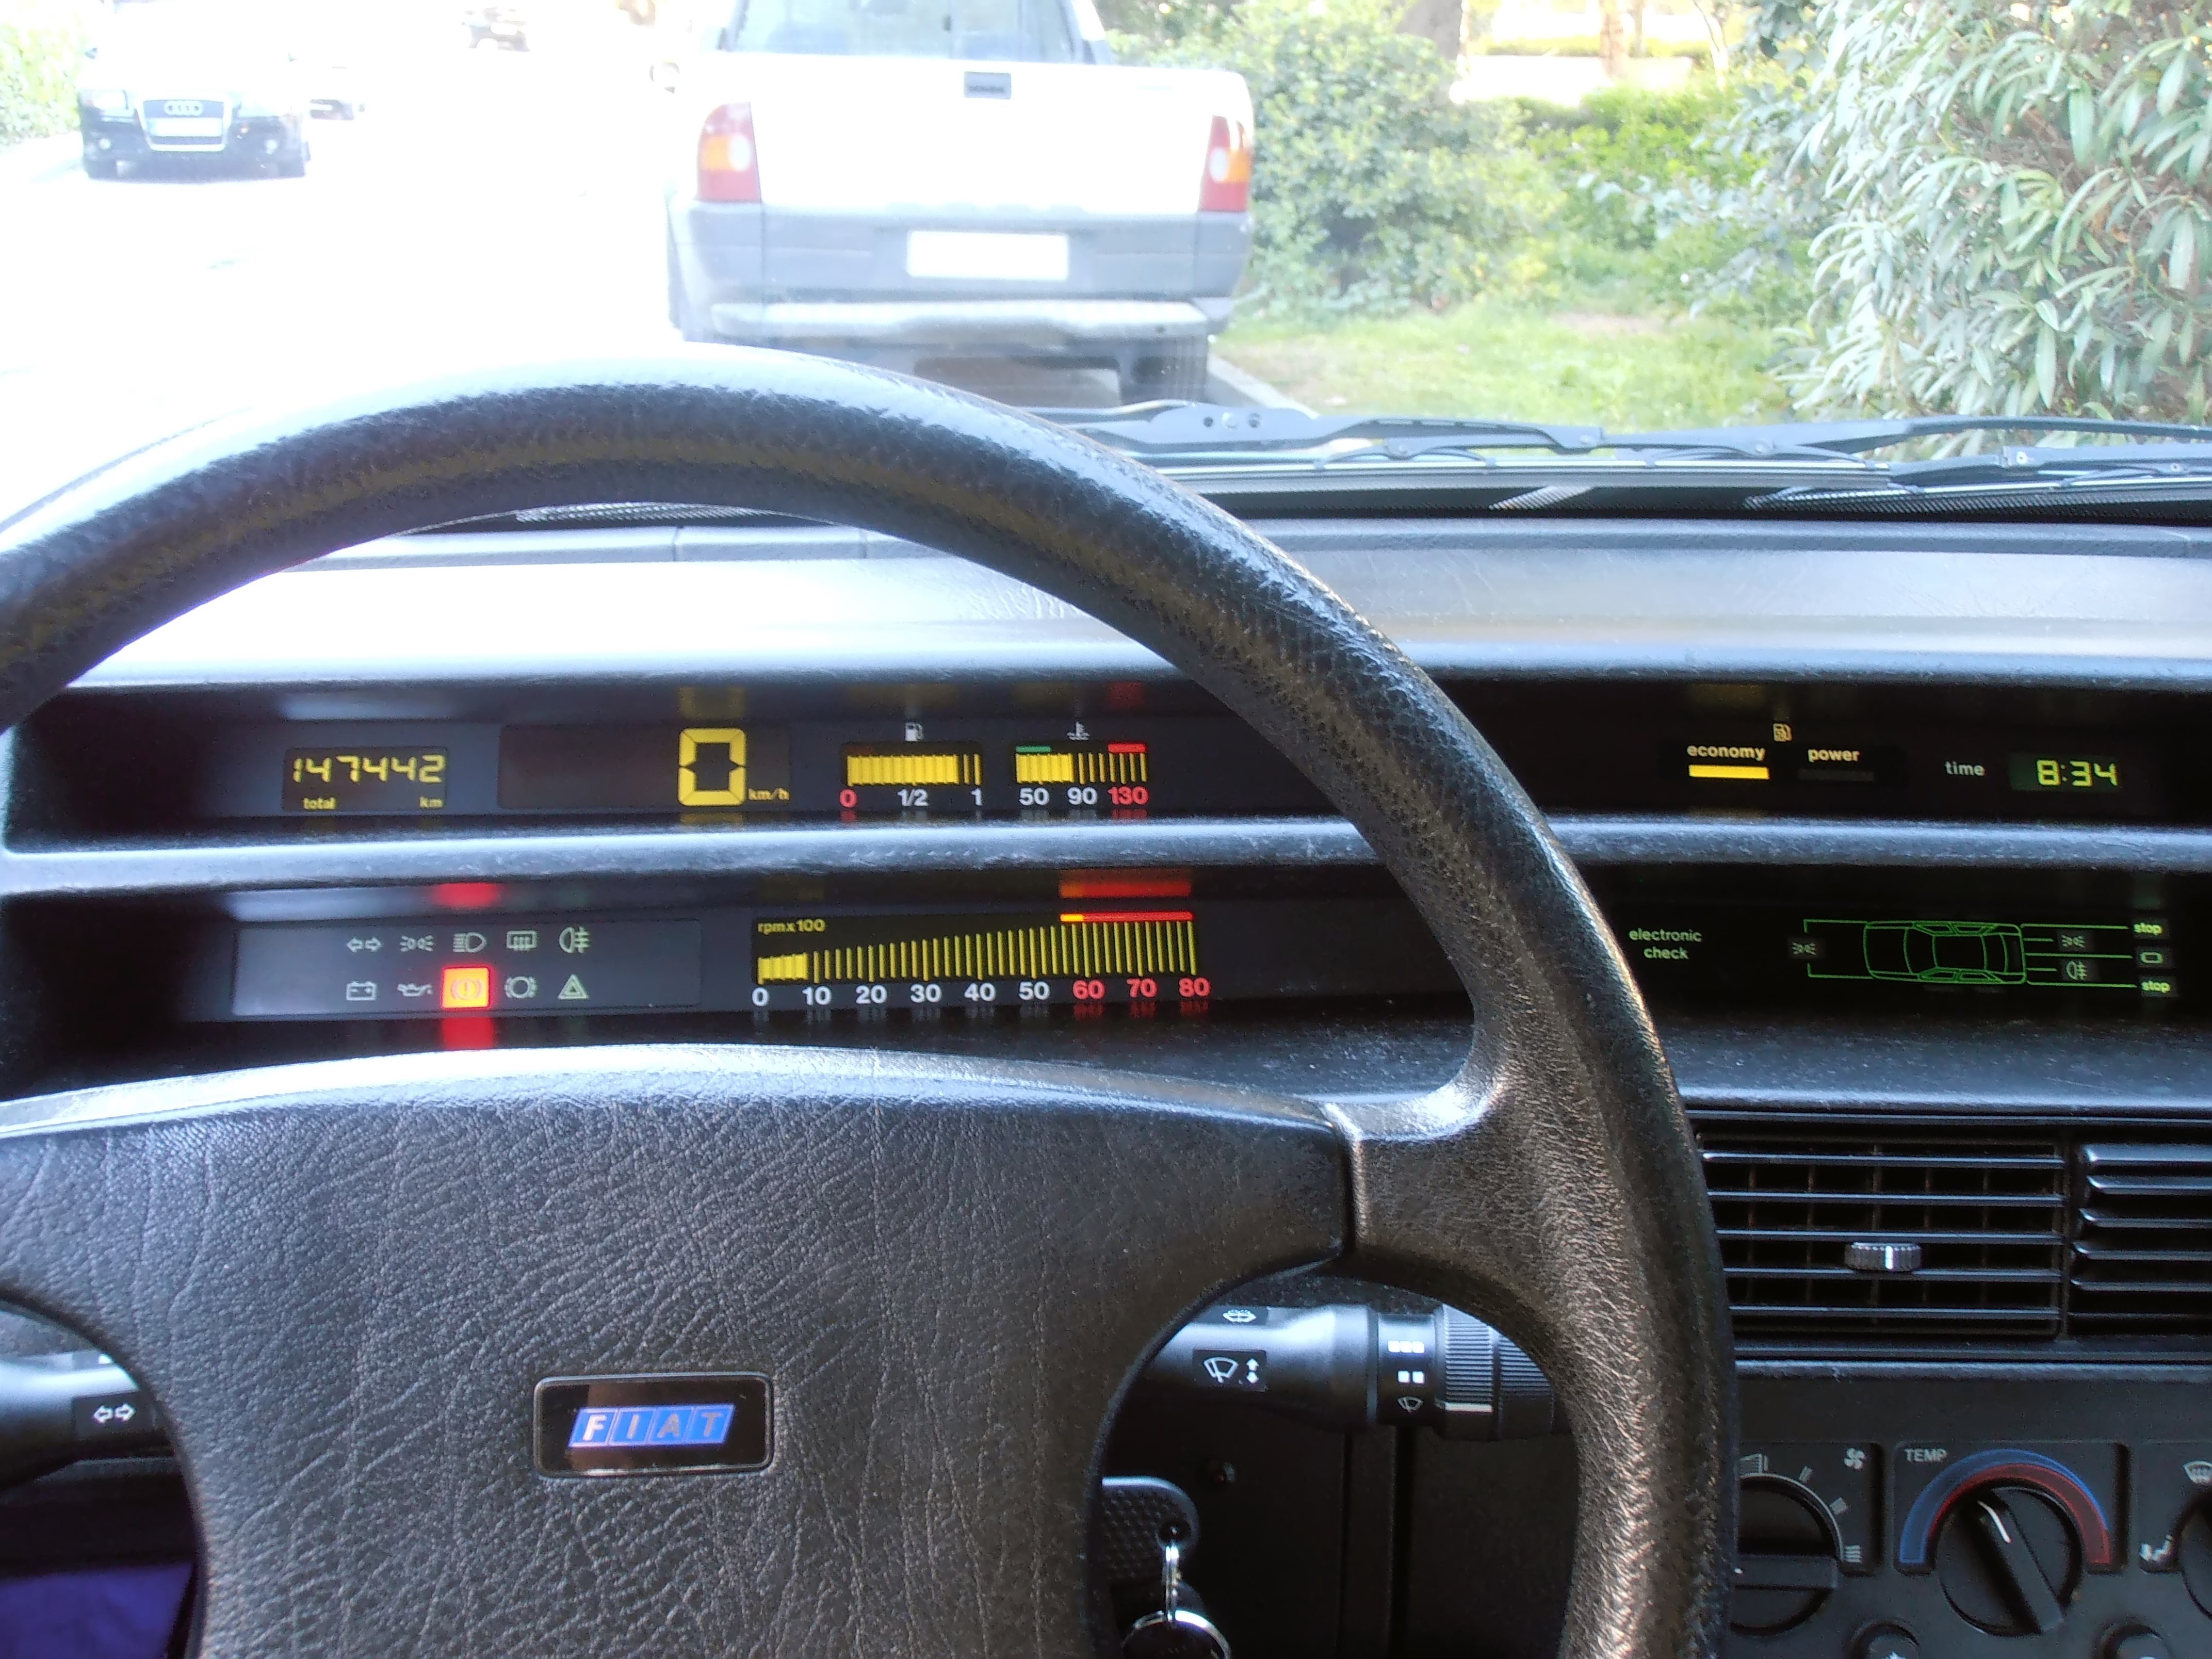 Fiat Tempra SLX 1.6 i.e. dashboard